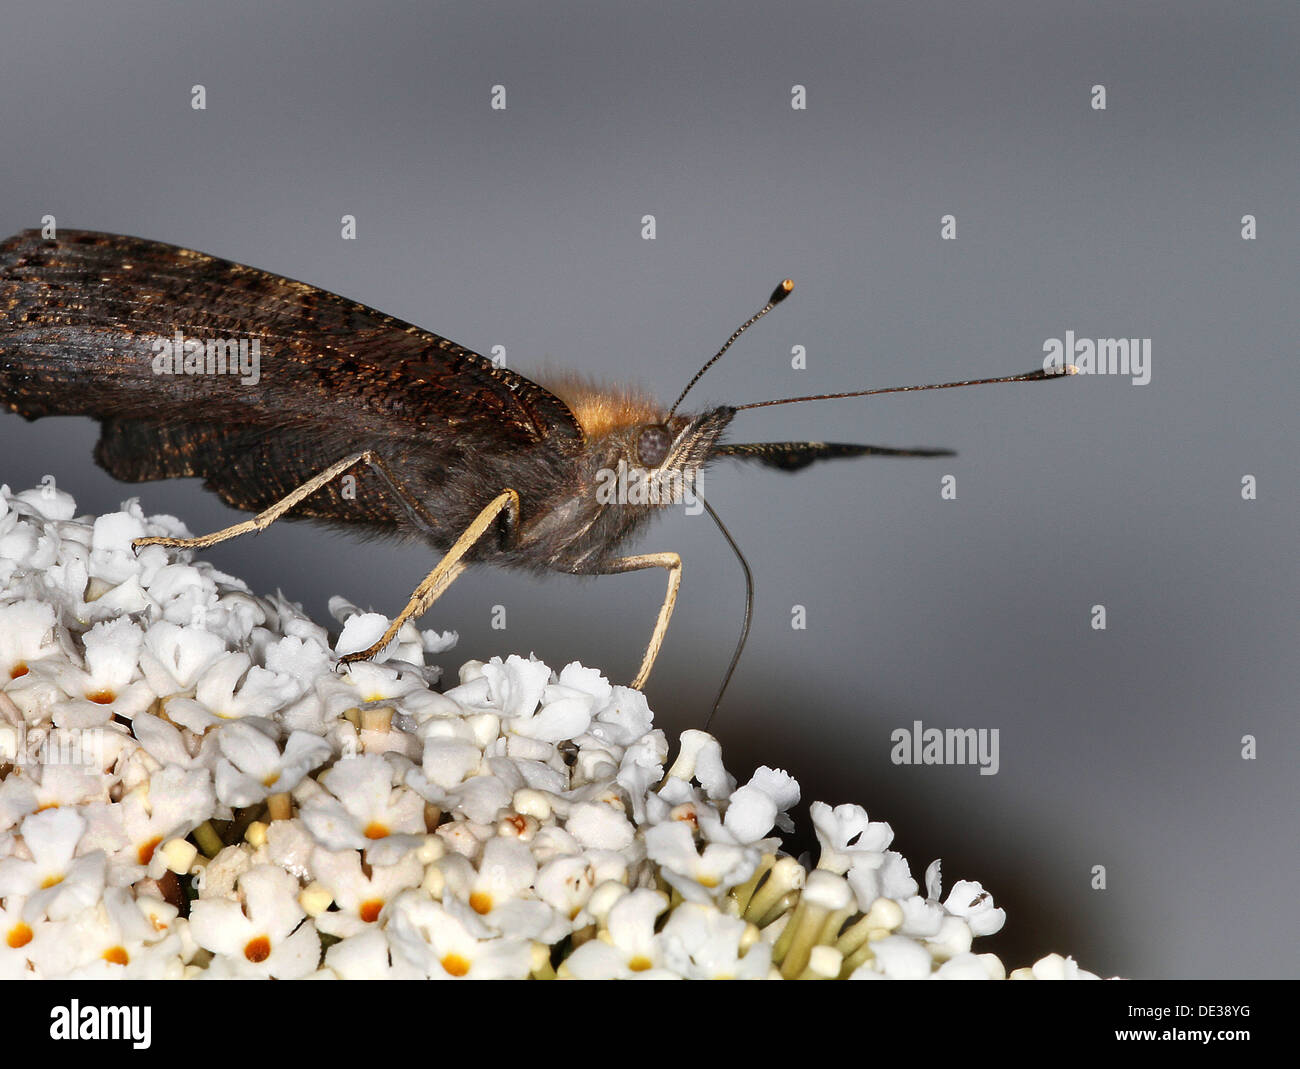 Butterfly feeding on nectar. Stock Photo